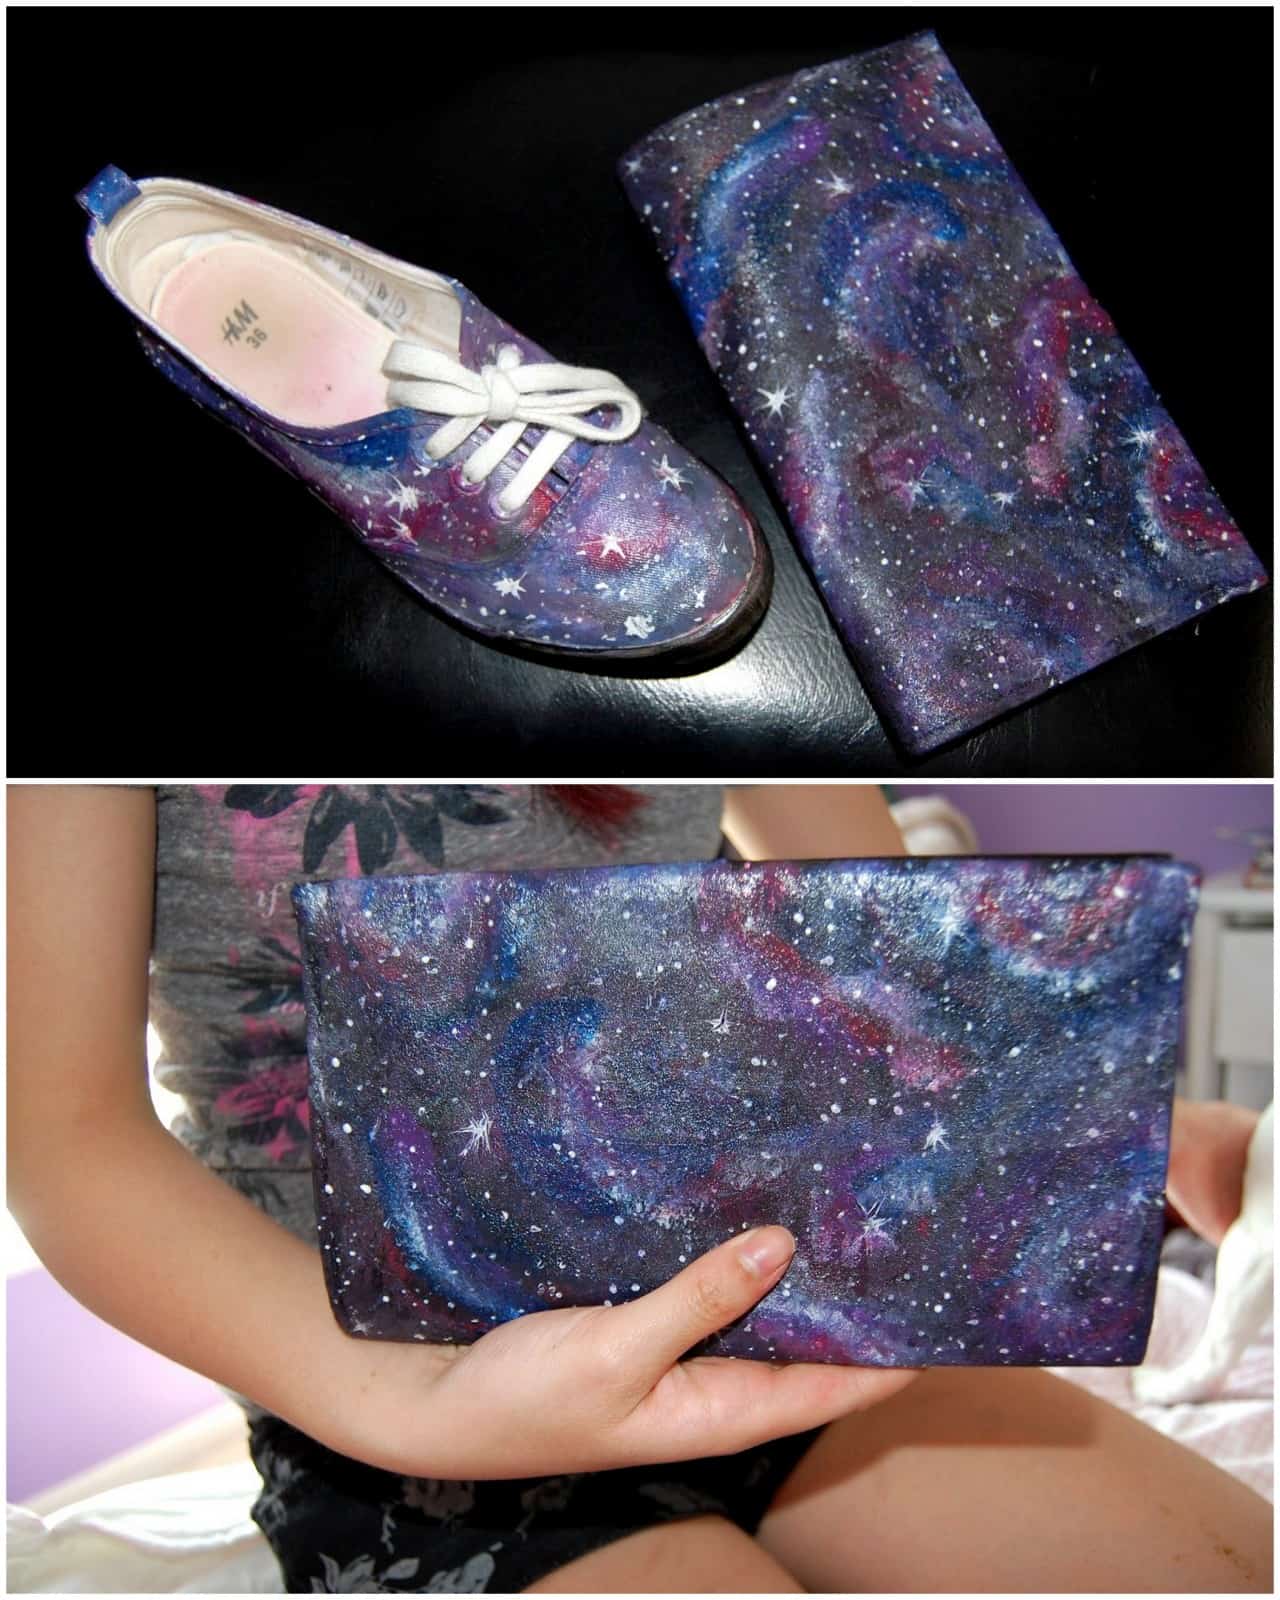 Painted galaxy clutch purse